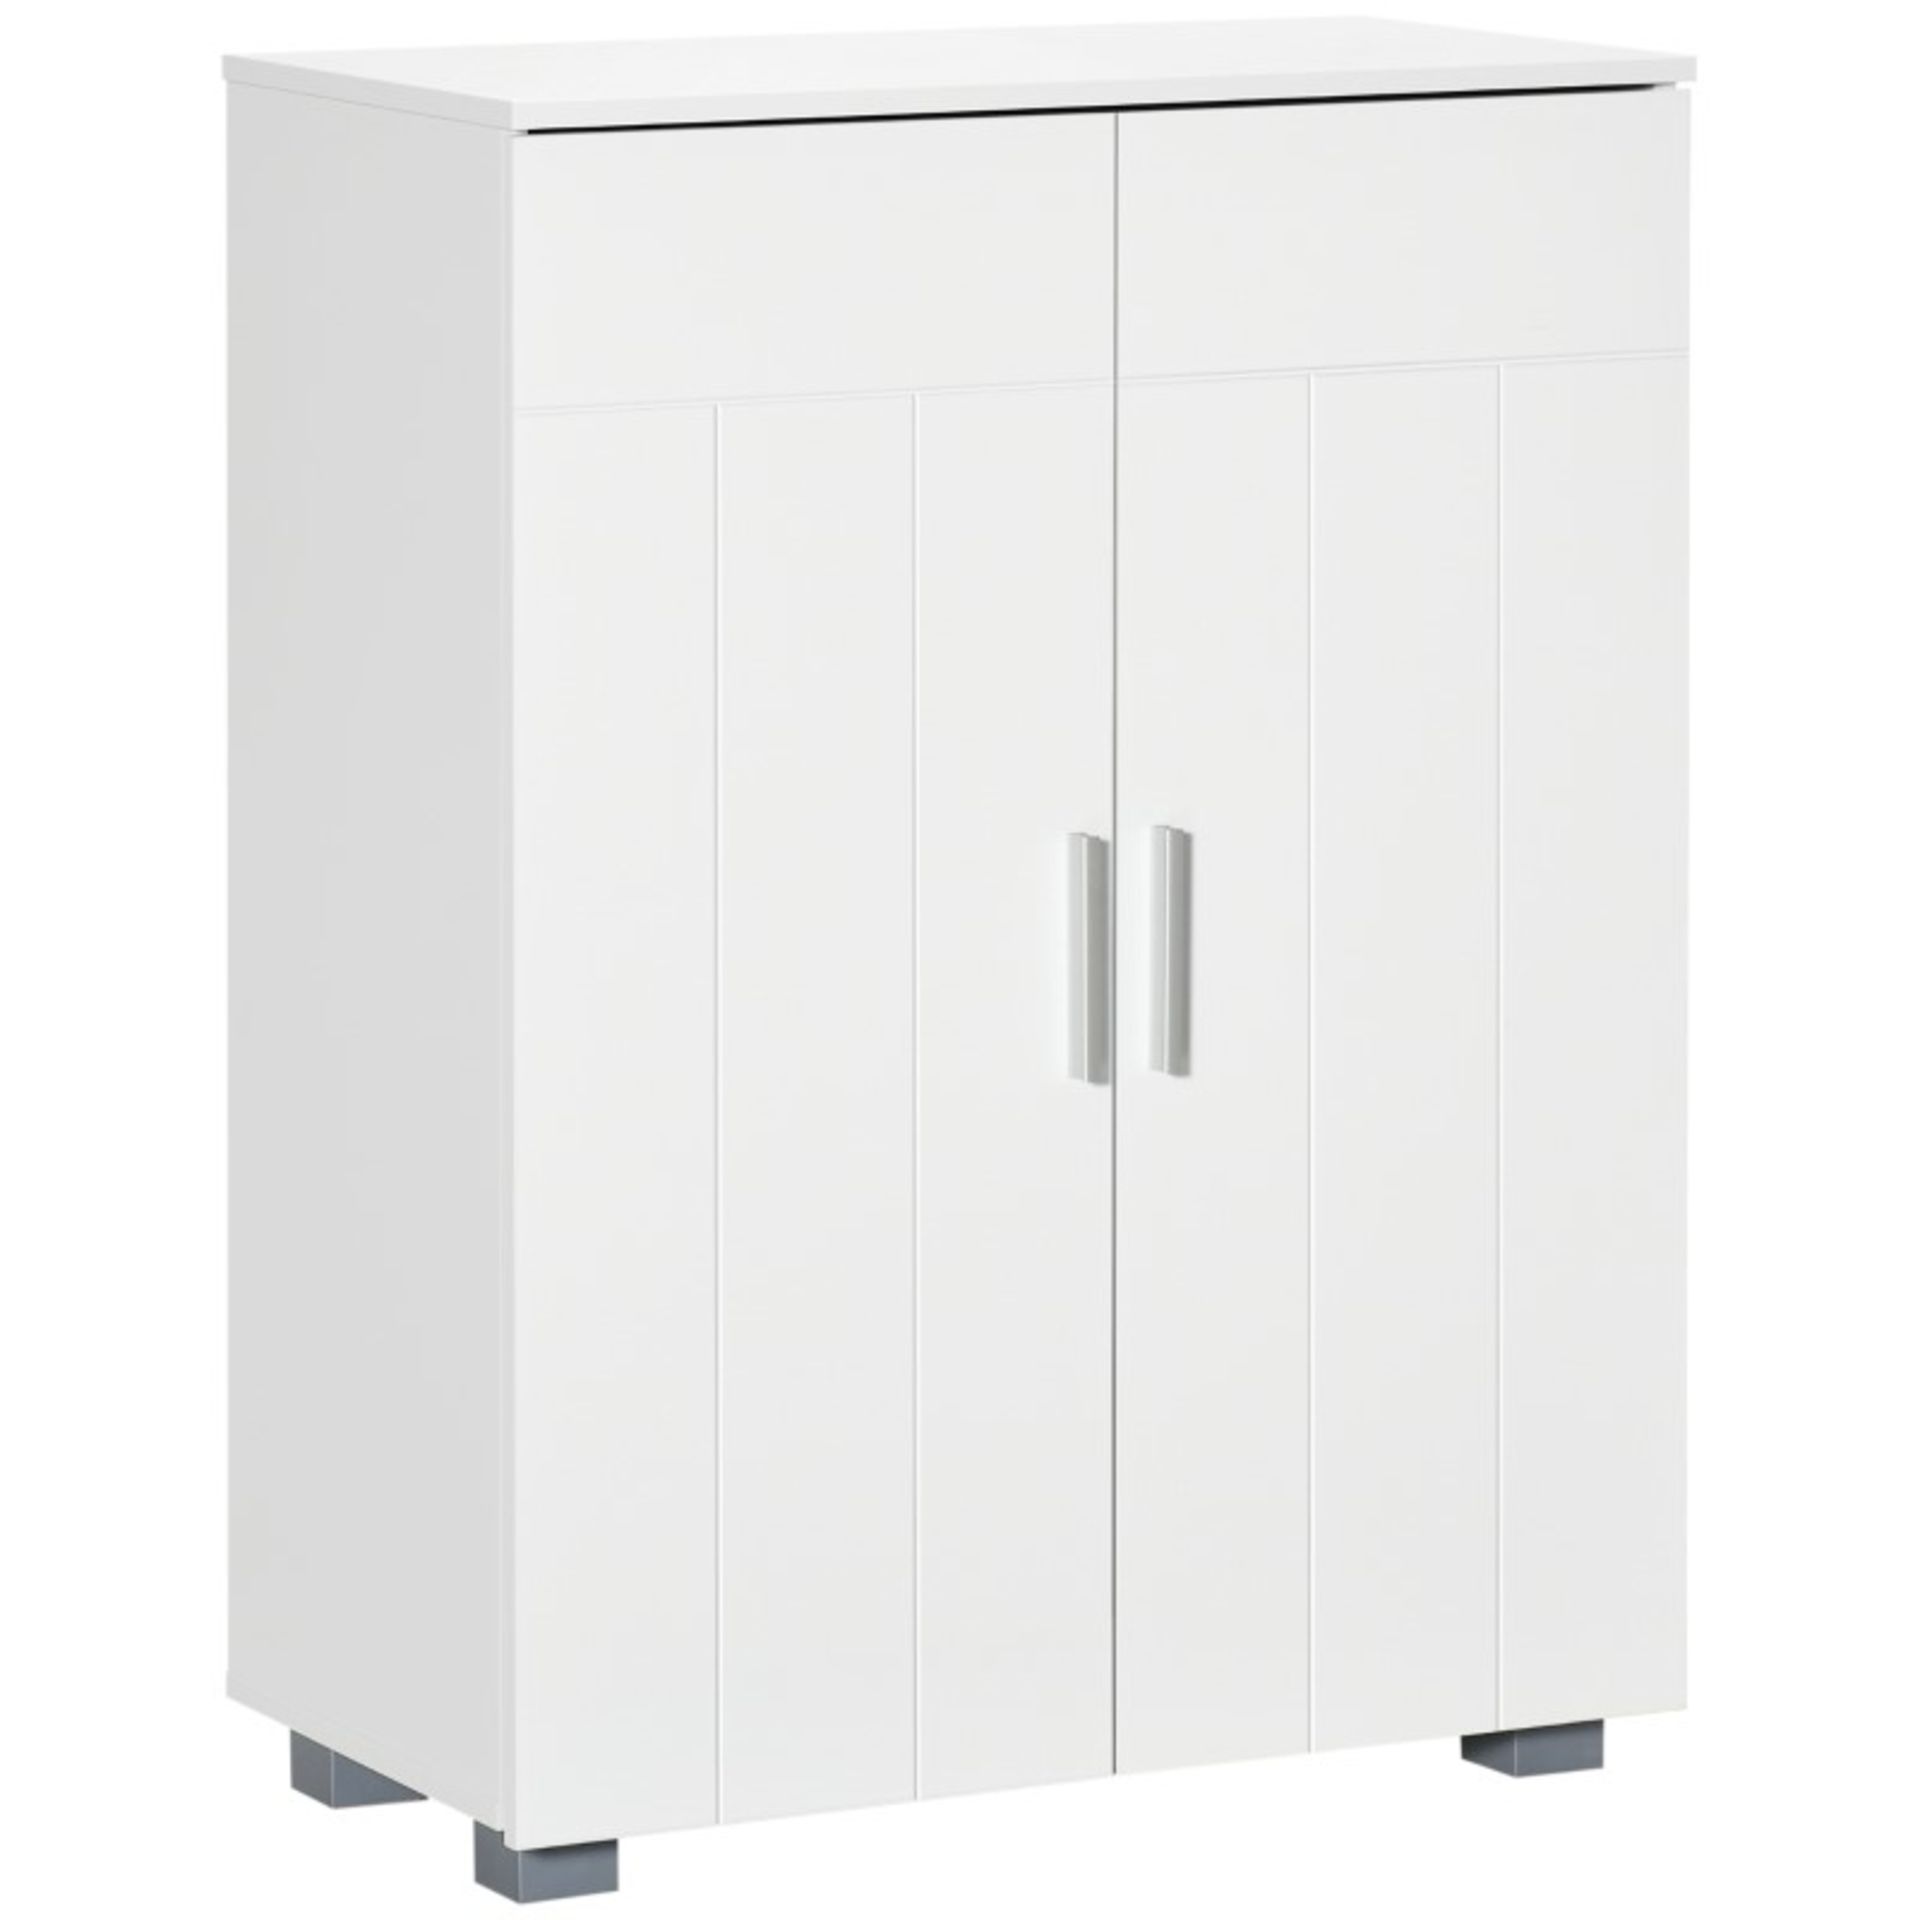 RRP £62.99 - Modern Bathroom Floor Cabinet, Free Standing Linen Cabinet, Storage Cupboard with 3